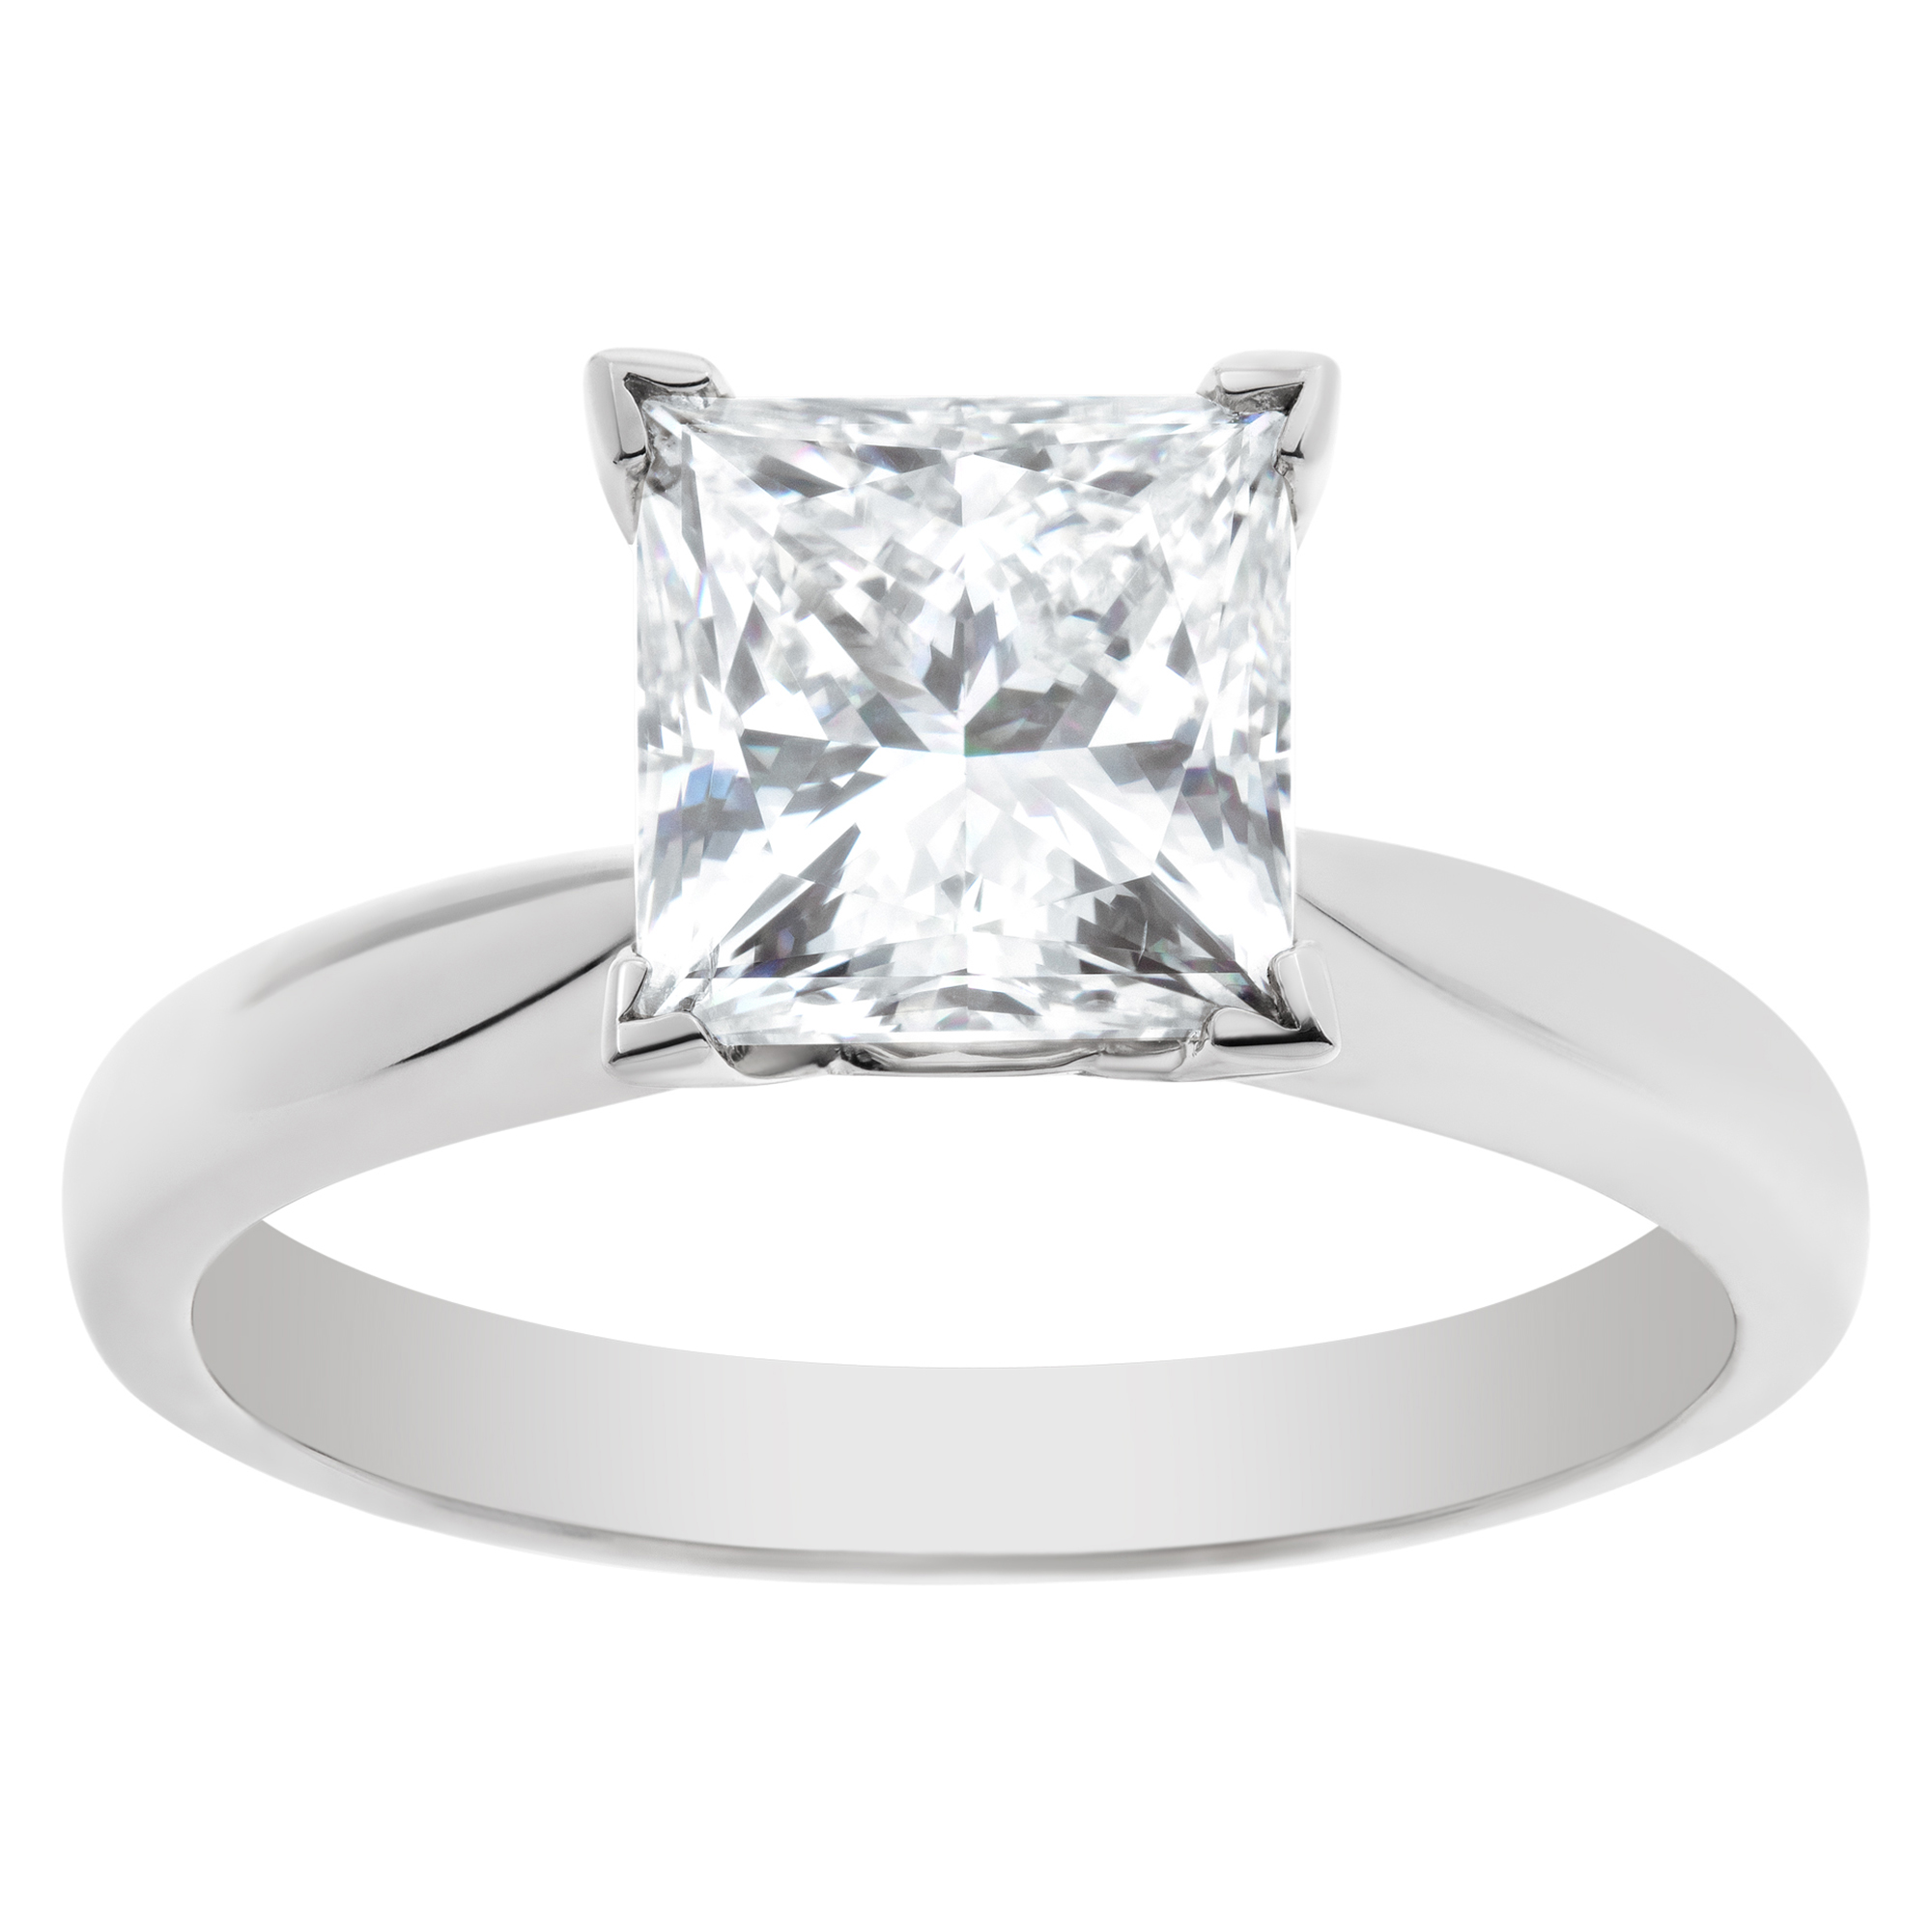 GIA certified princess cut diamond 2.09 carat (J color, SI1 clarity) ring